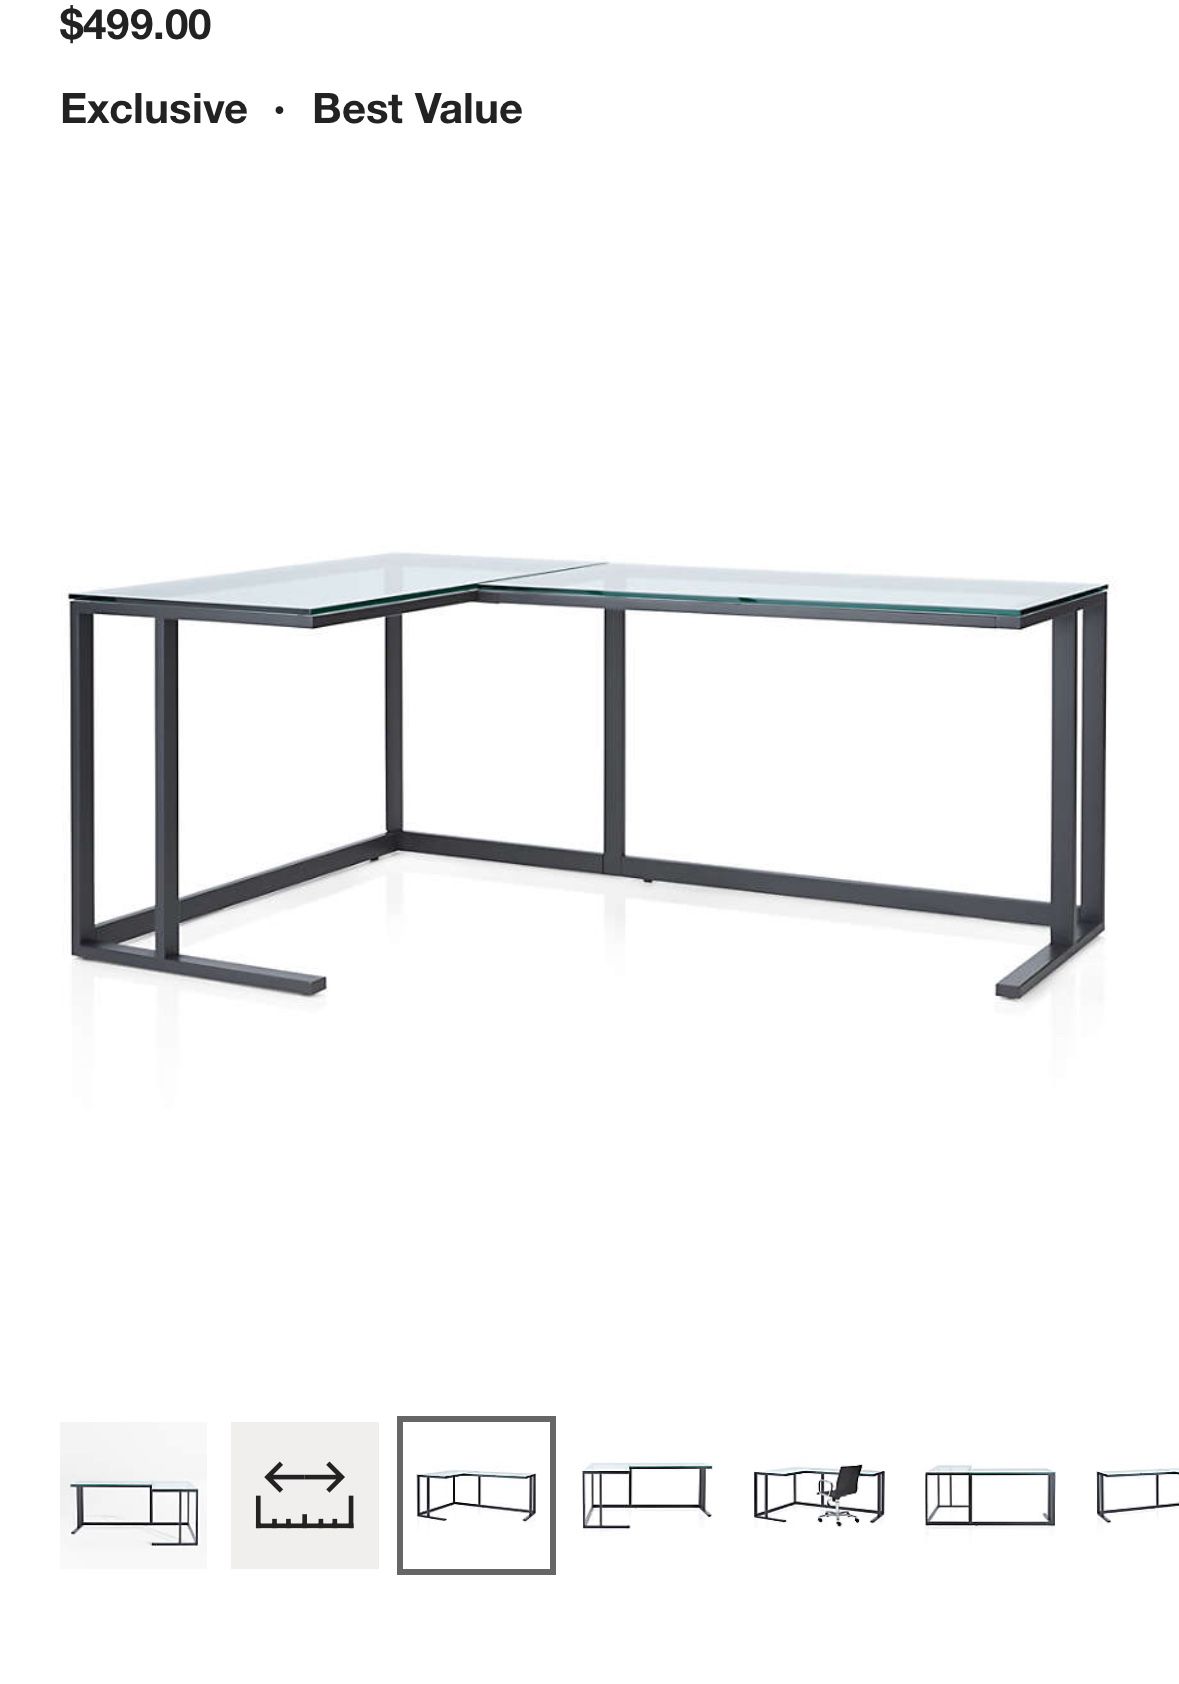 Crate and Barrel CB2 Pilsen Graphite L shaped Glass Desk